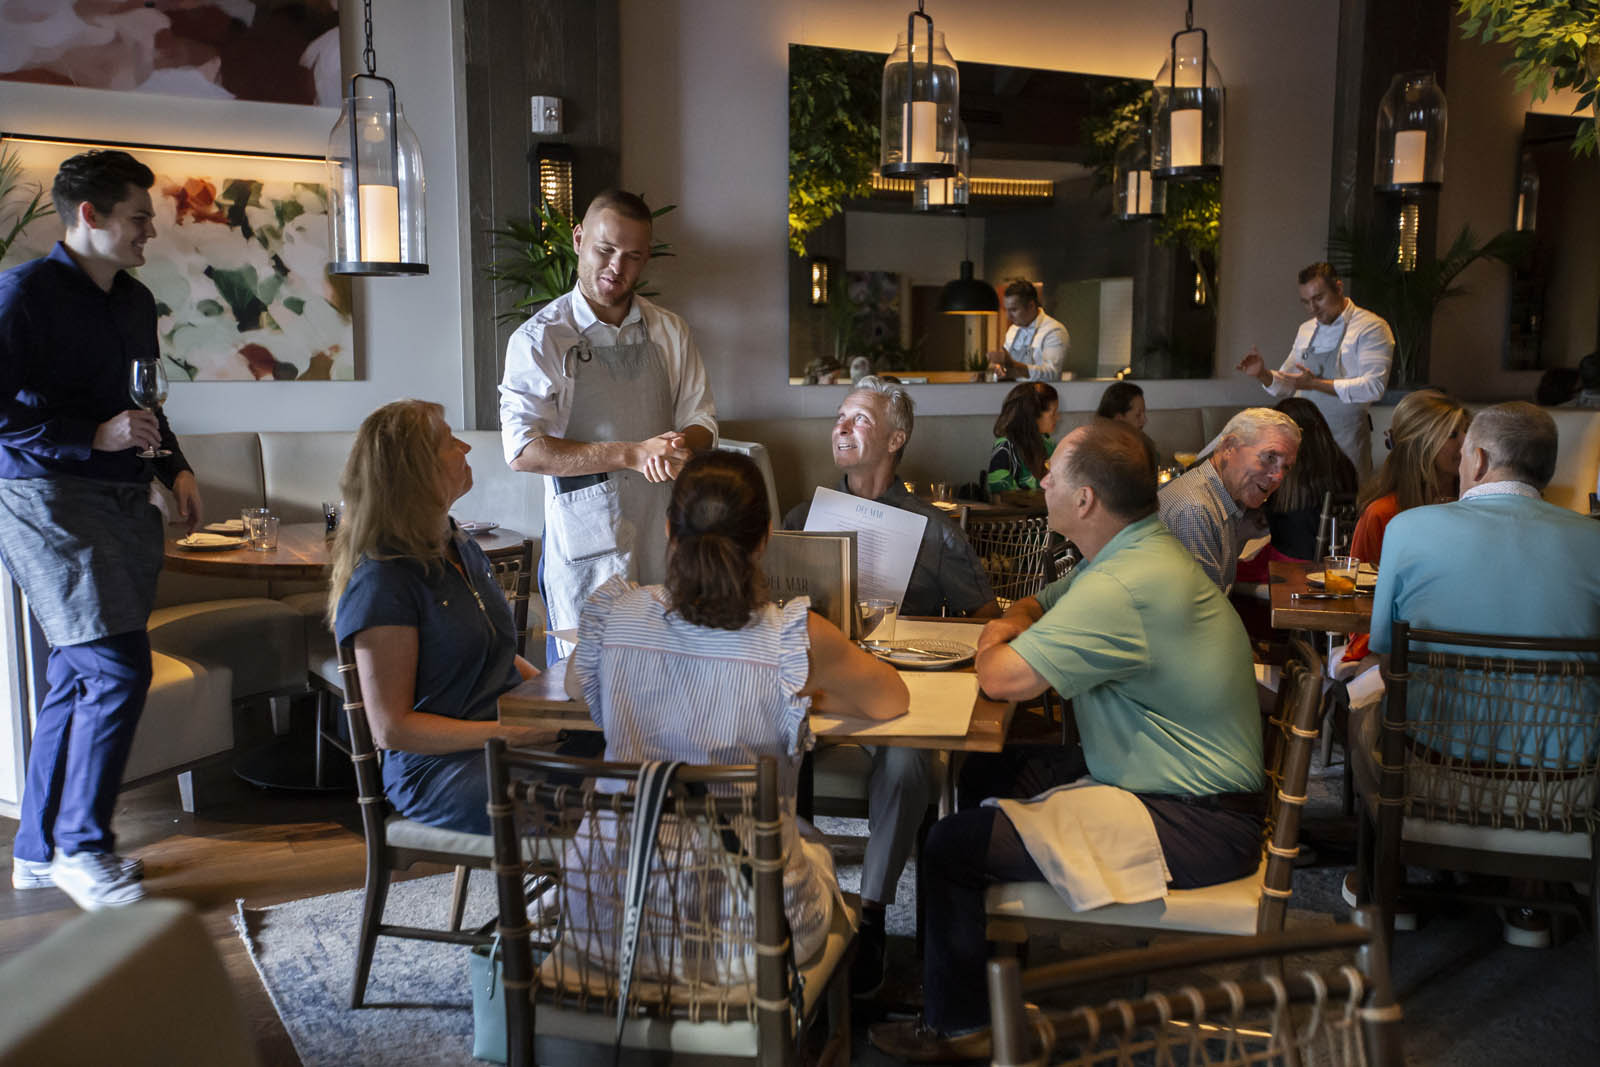 Server taking order at group table at Del Mar Naples restaurant in Florida.